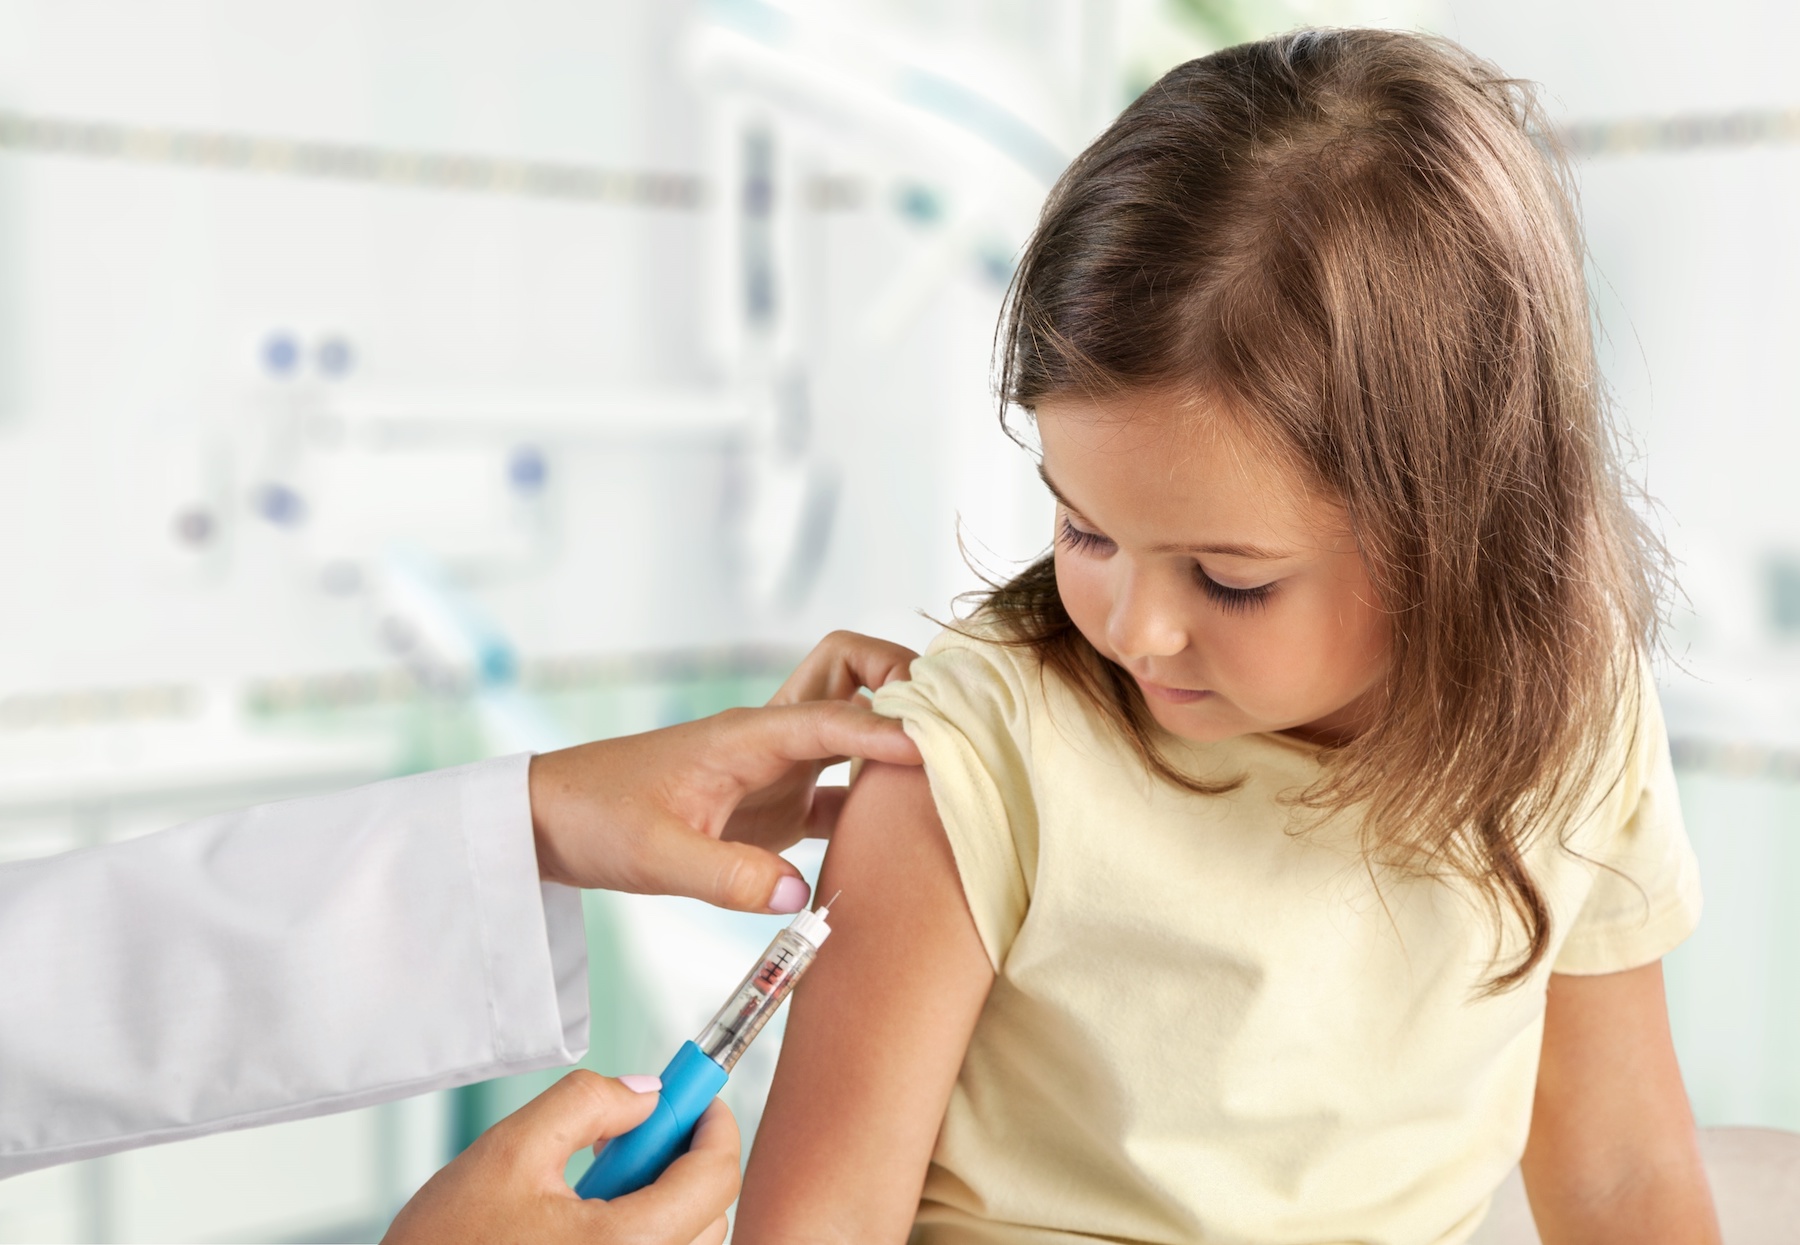 Le vaccin de moderna déconseillé aux moins de 30 ans. © BillonPhotos.com, Adobe Stock